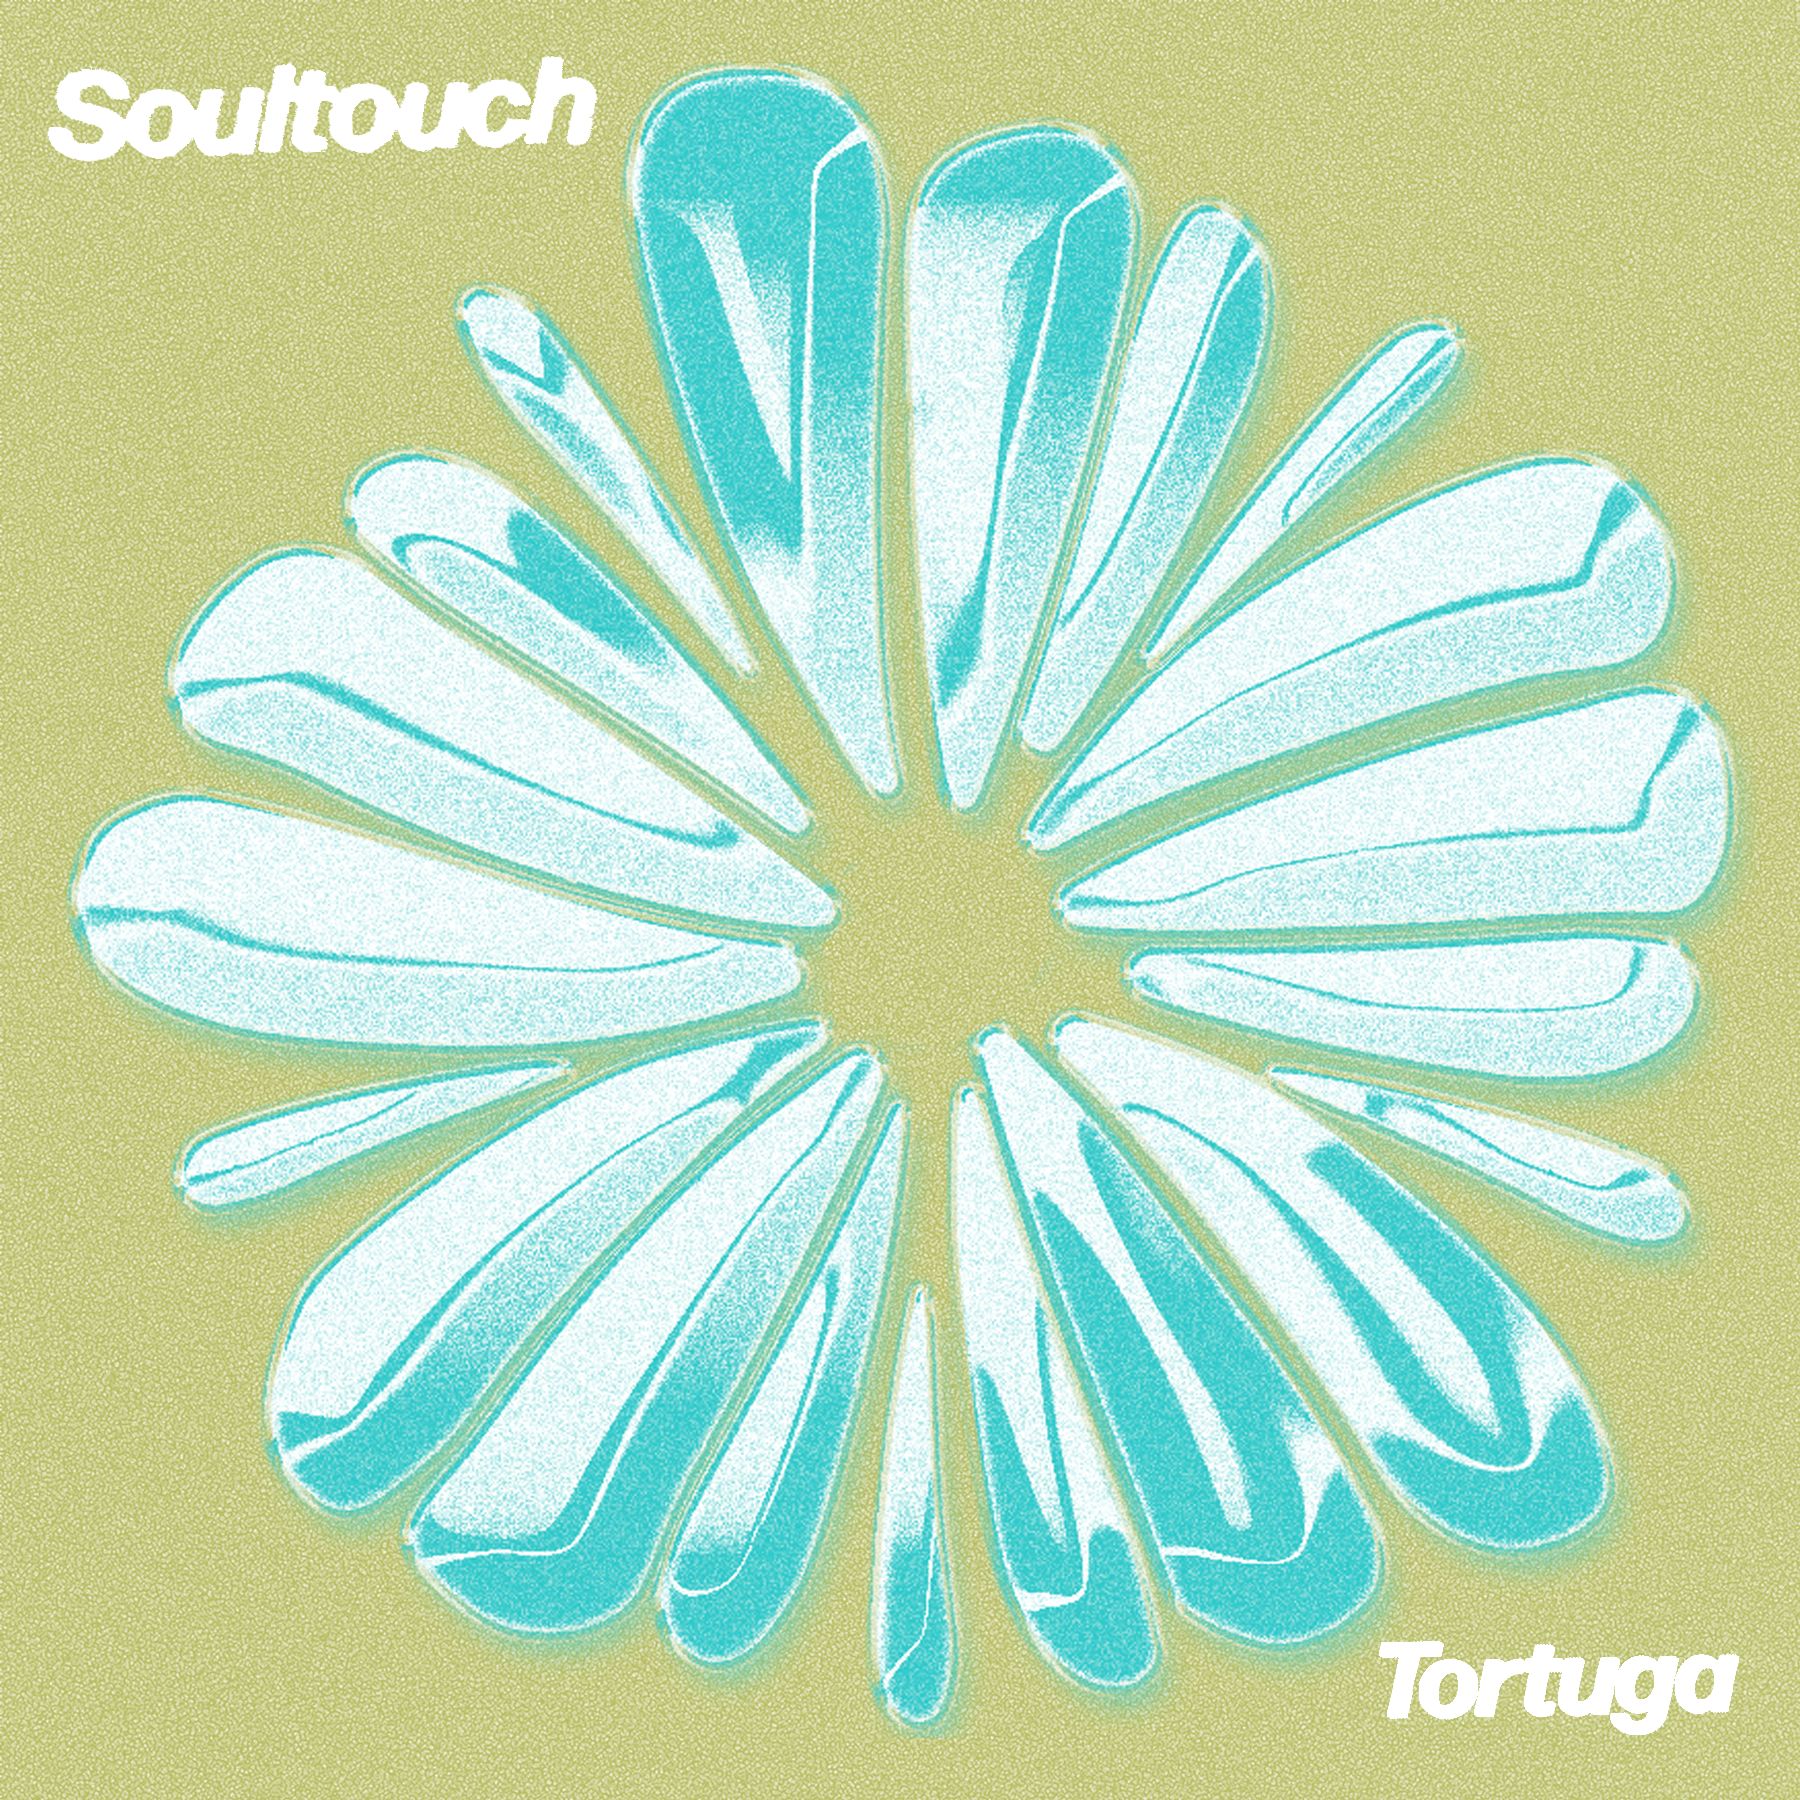 डाउनलोड करा PREMIERE : Tortuga - Soultouch